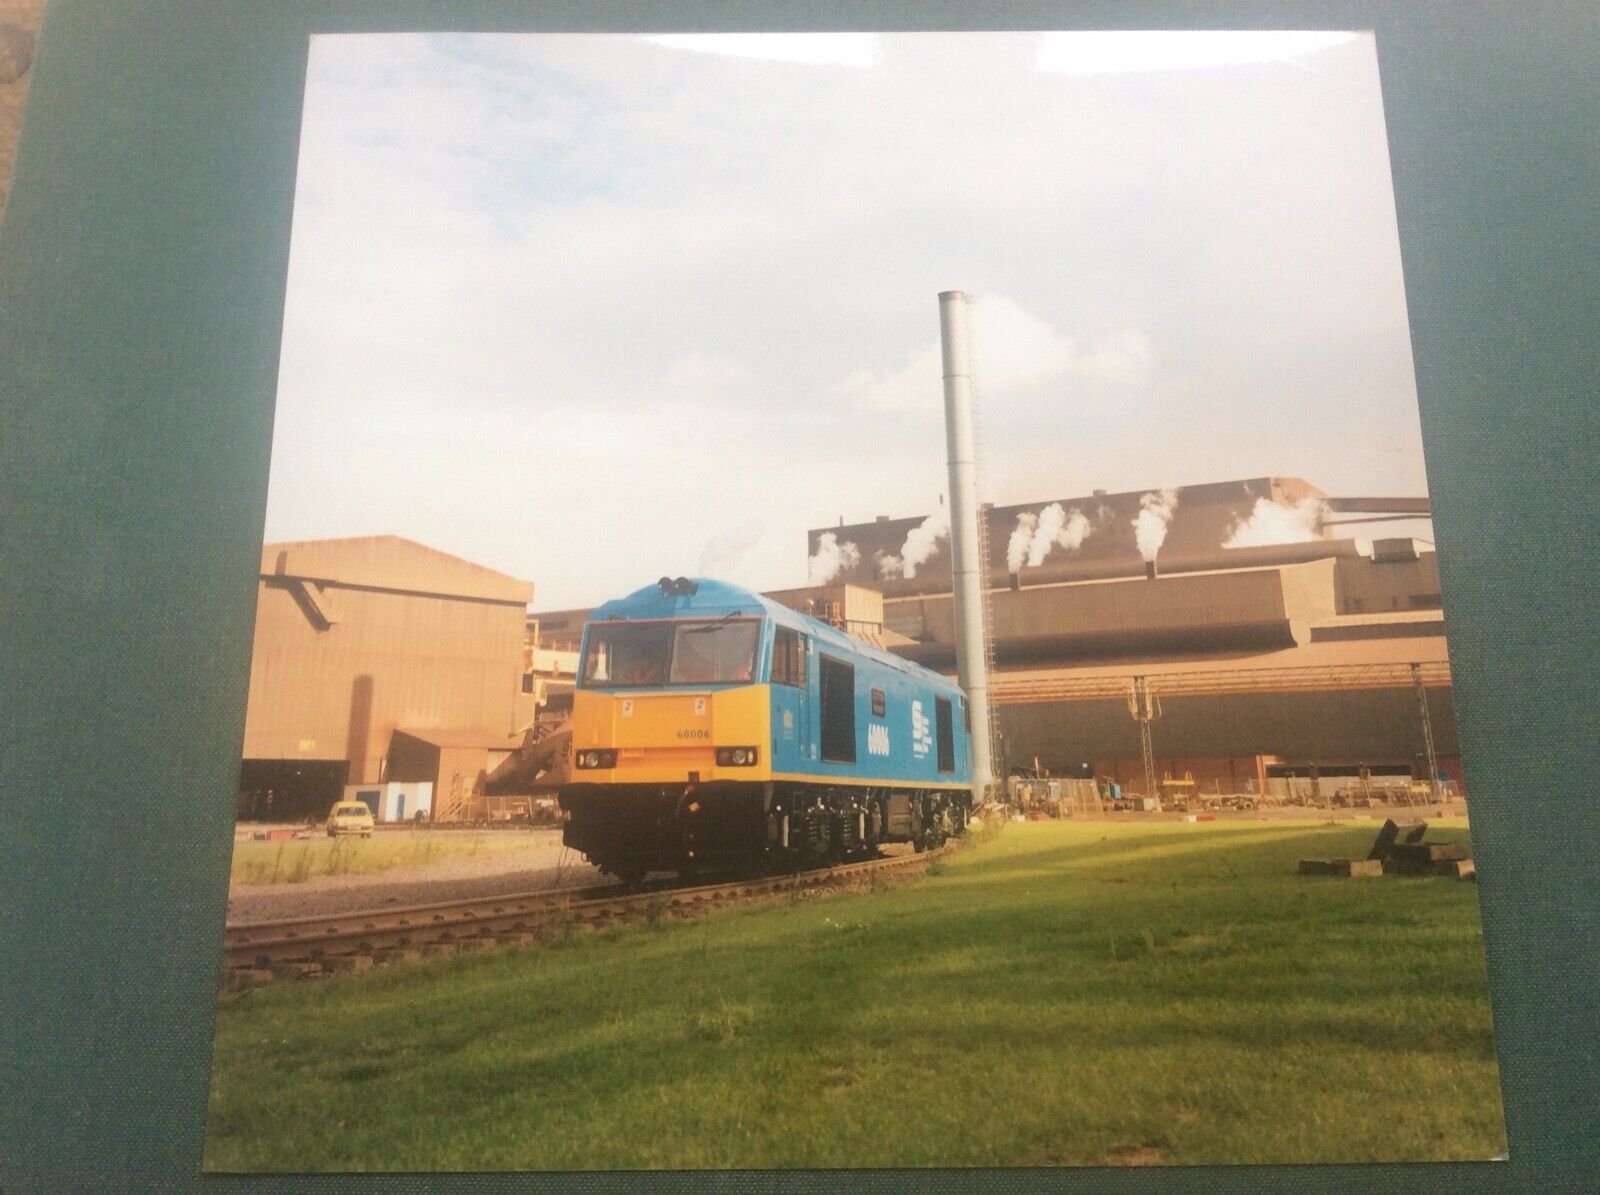 Scunthorpe British Steel Colour Photo Print 2 Ironmaster Railway Rail Loco 8x8”